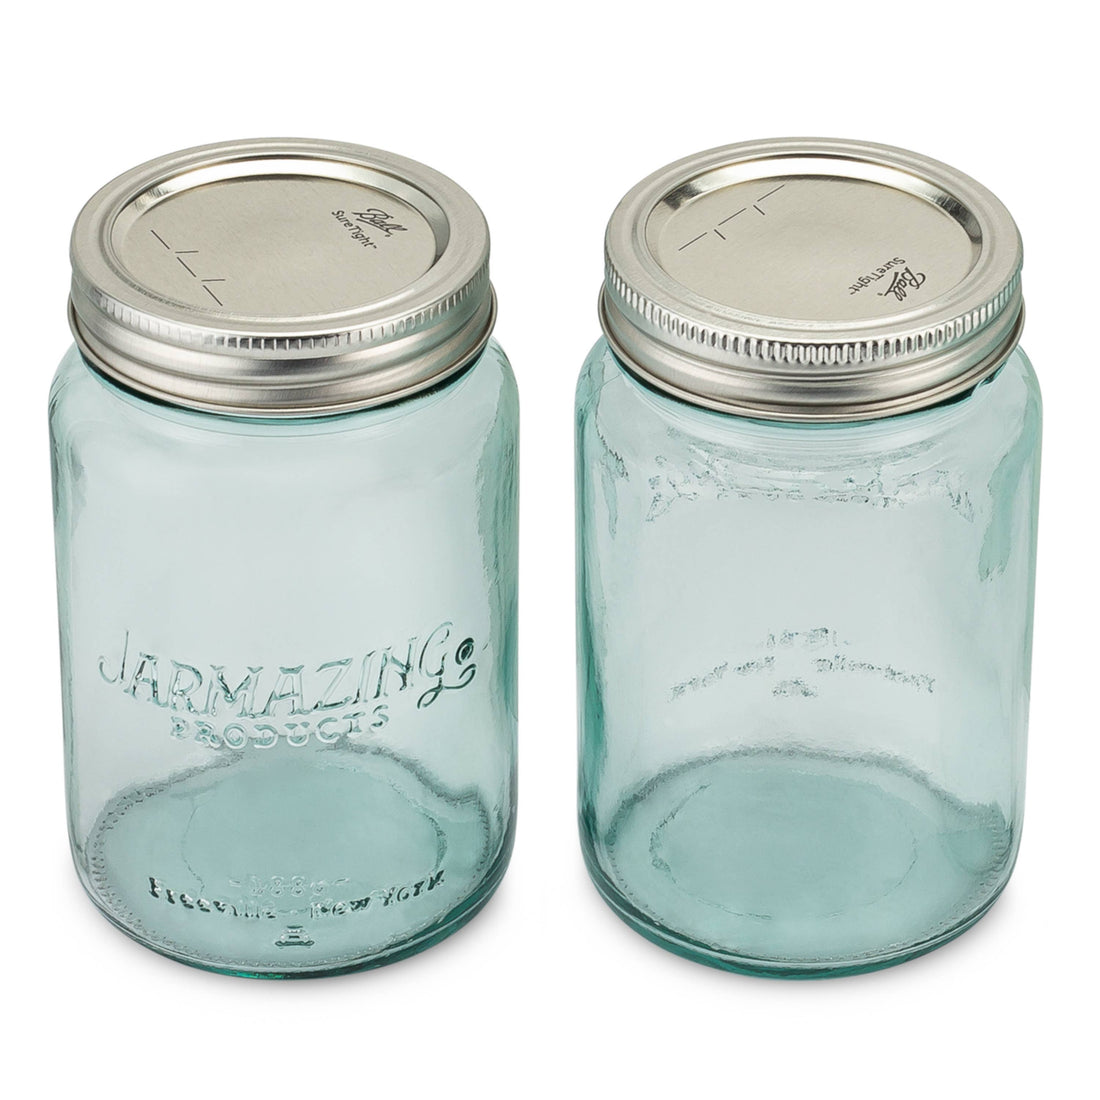 Six-Pack set of 16-Ounce Glass Mason Jars - Regular Mouth